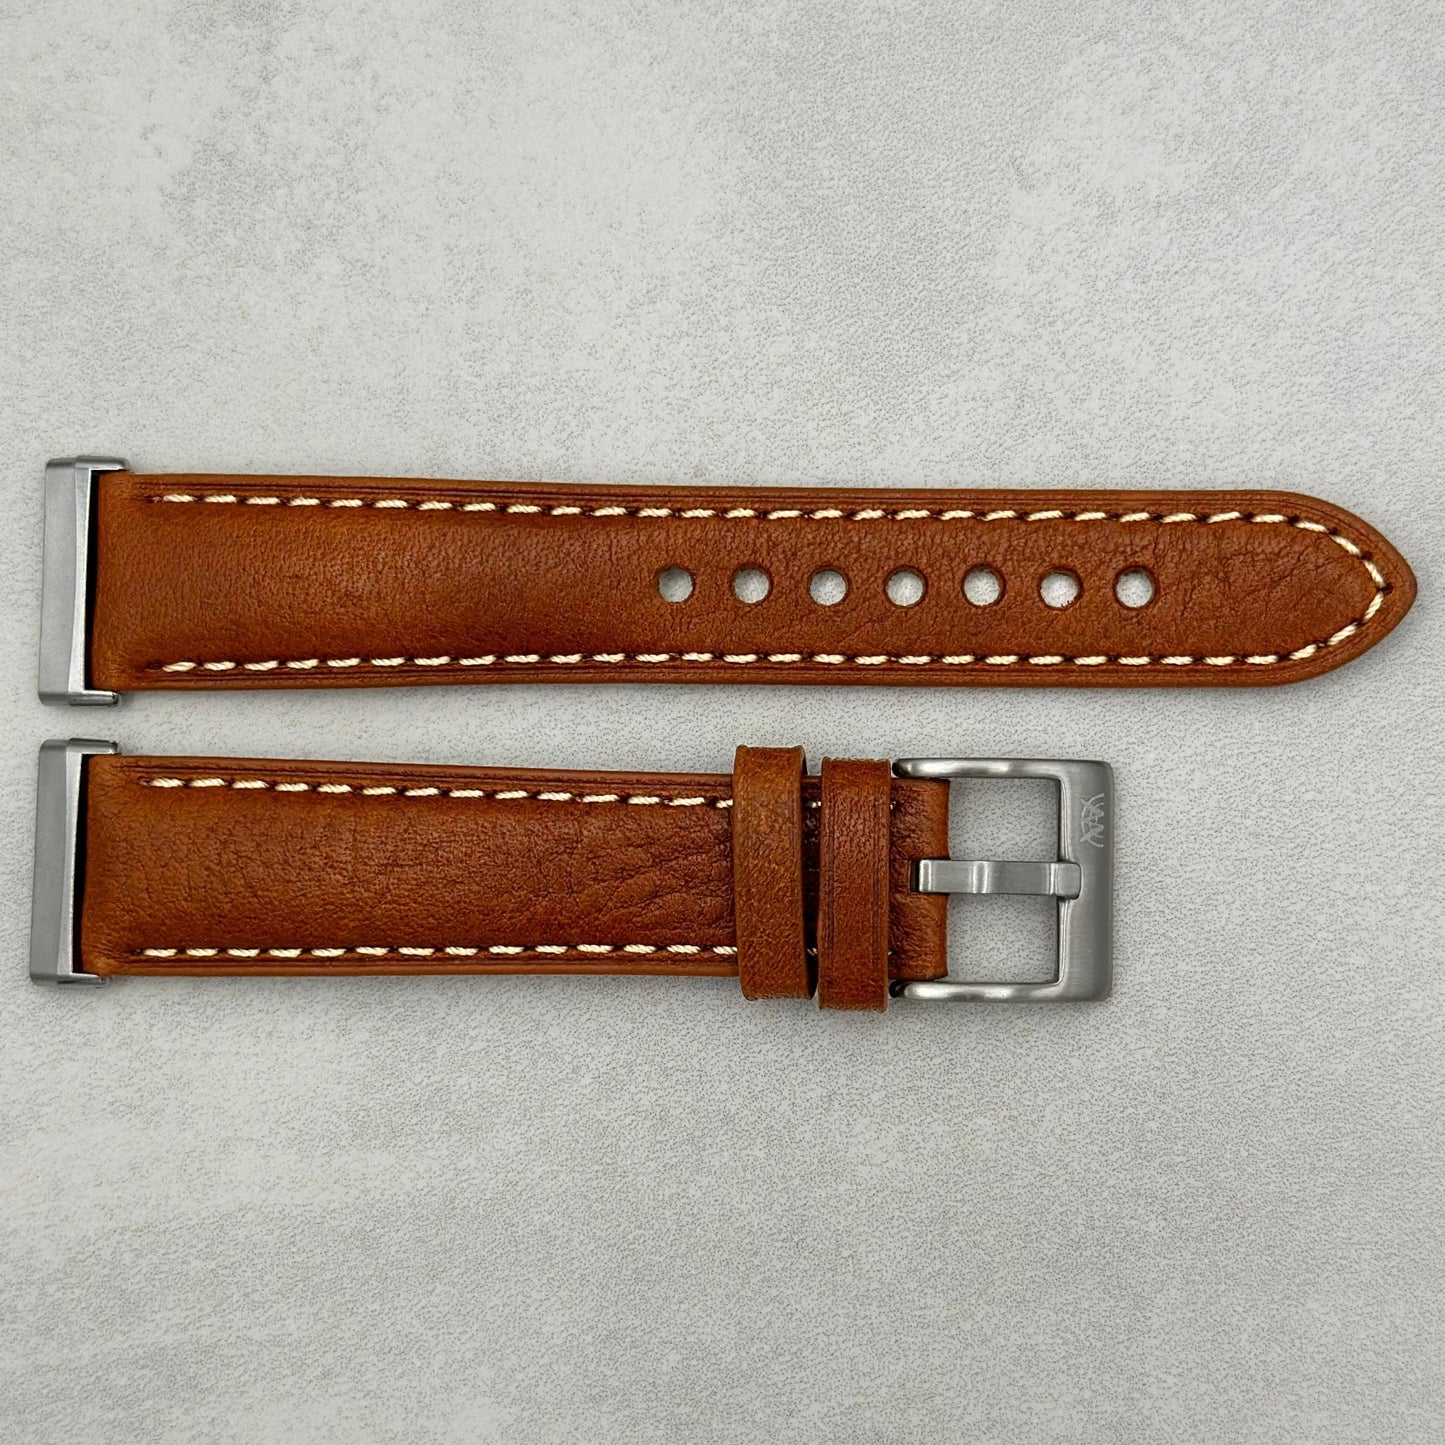 The Rome: Copper Brown Italian Full Grain Leather Fitbit Versa/Sense Watch Strap